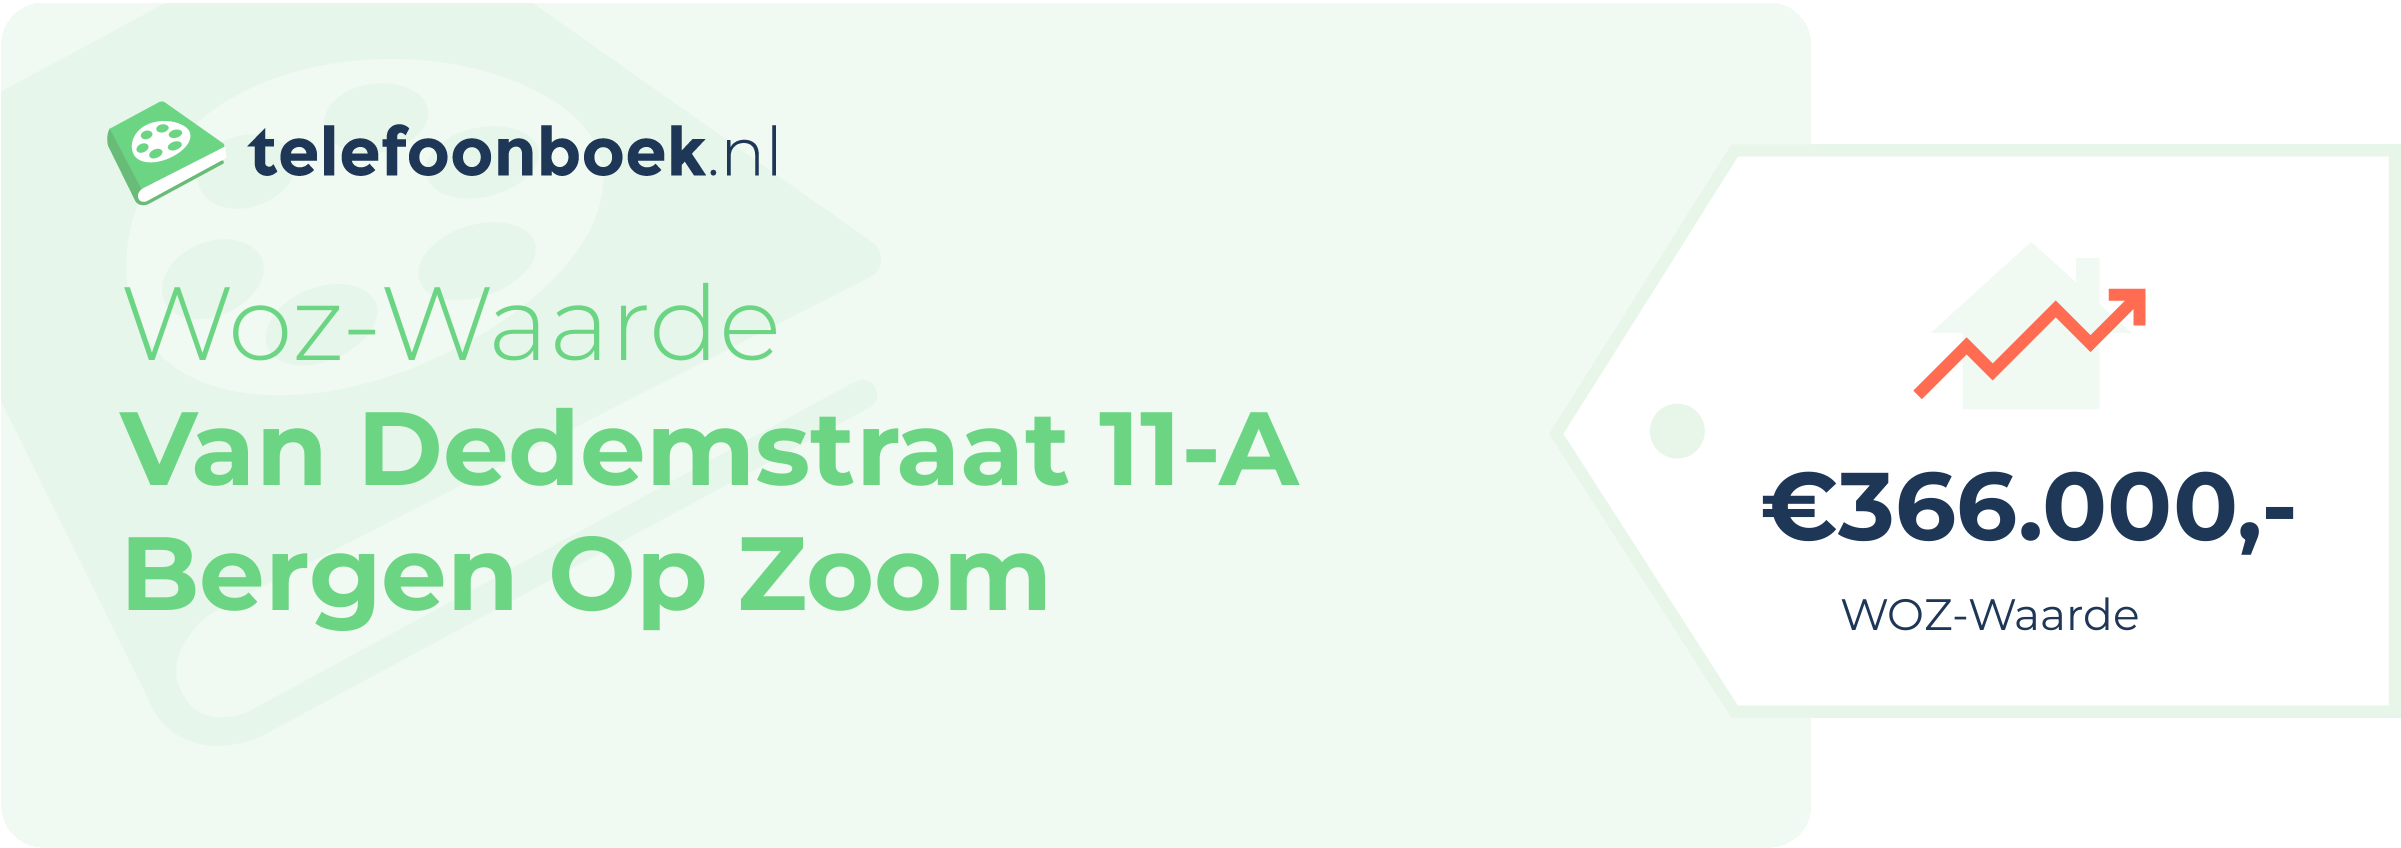 WOZ-waarde Van Dedemstraat 11-A Bergen Op Zoom